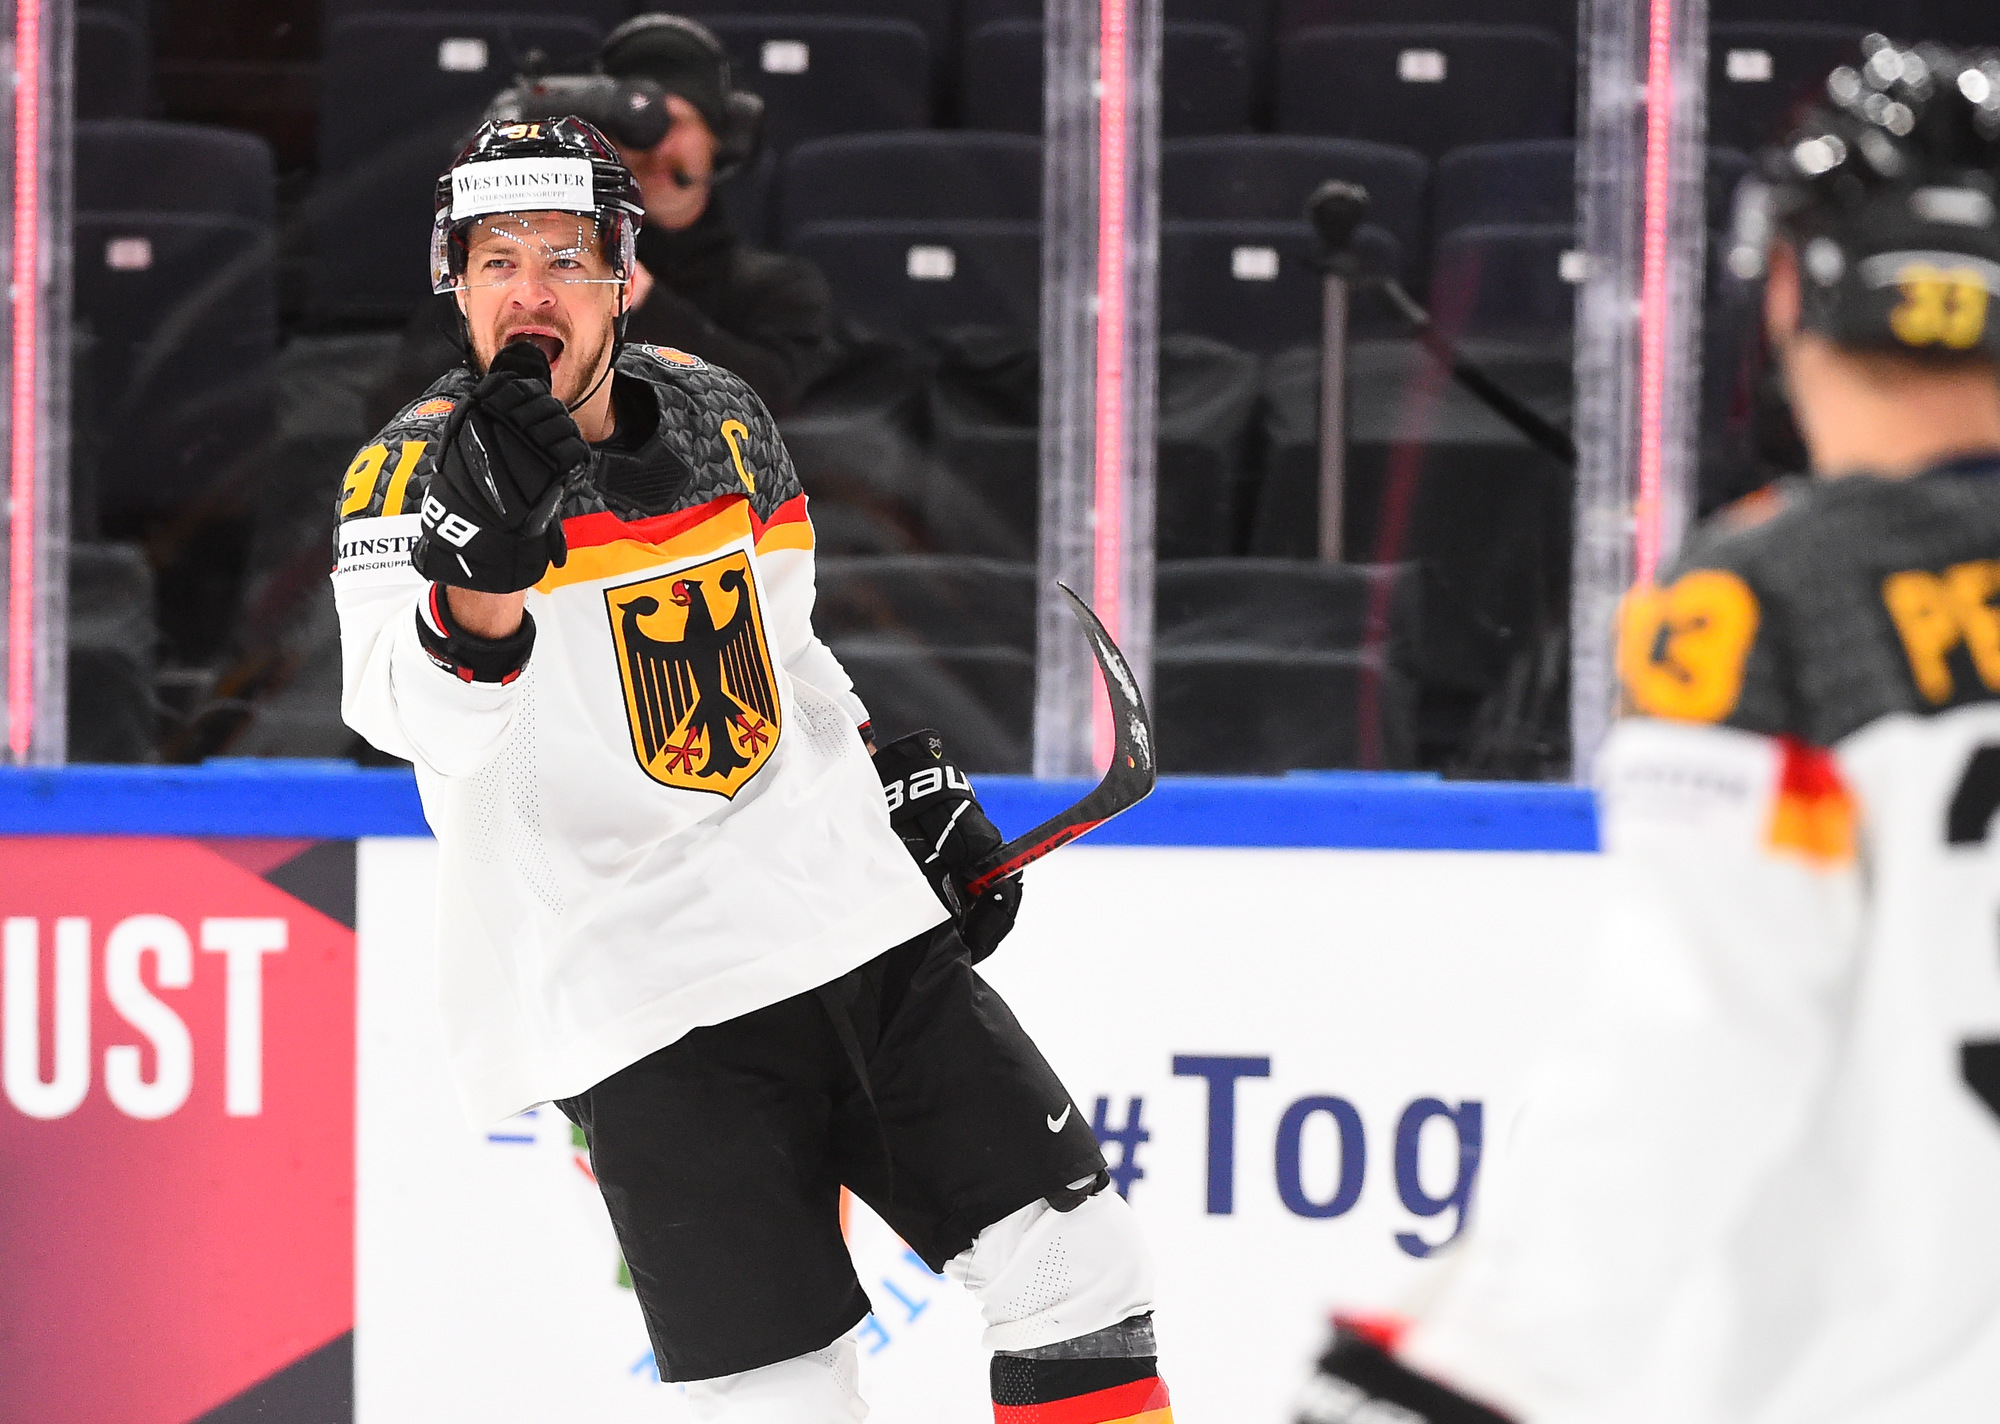 IIHF - Germany gets first win in OT